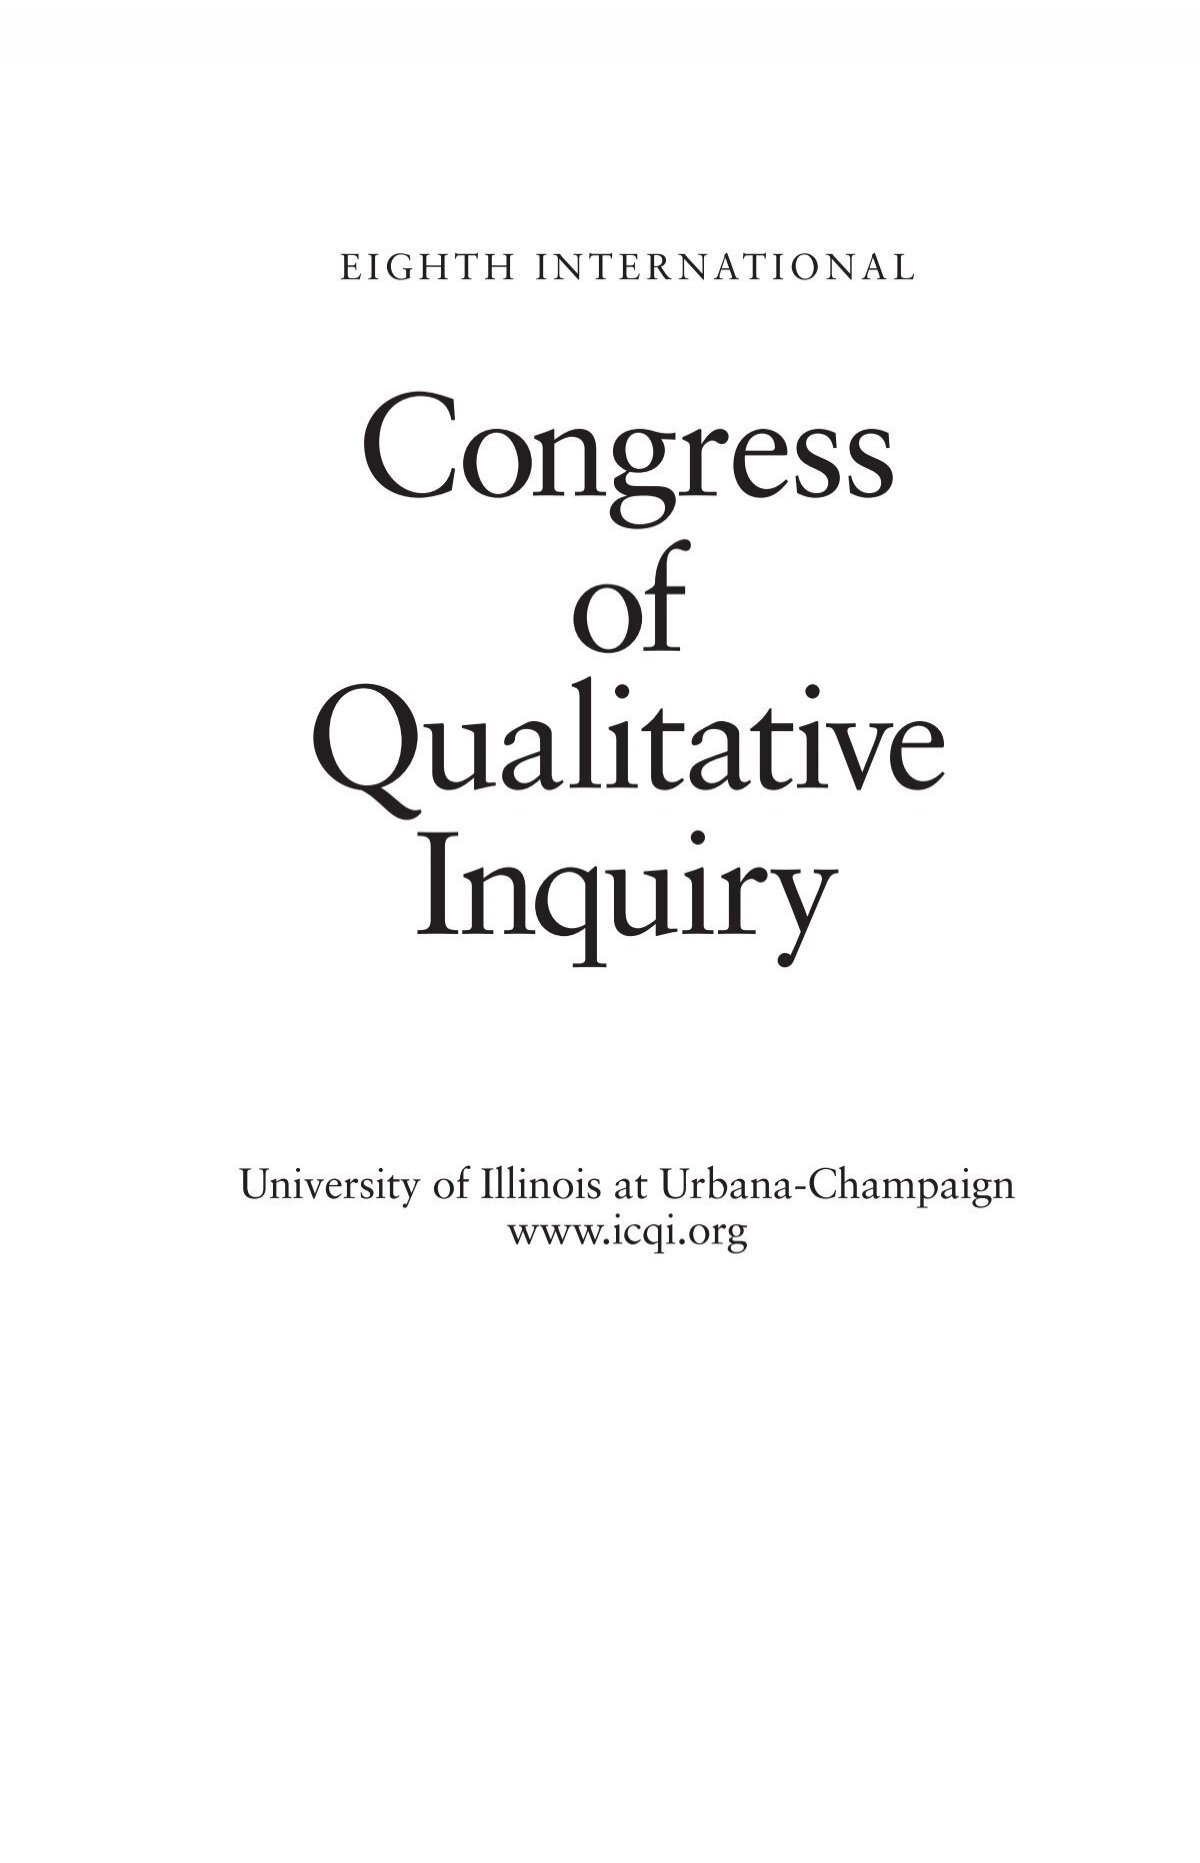 Eighth International Congress of Qualitative Inquiry - ICQI.org